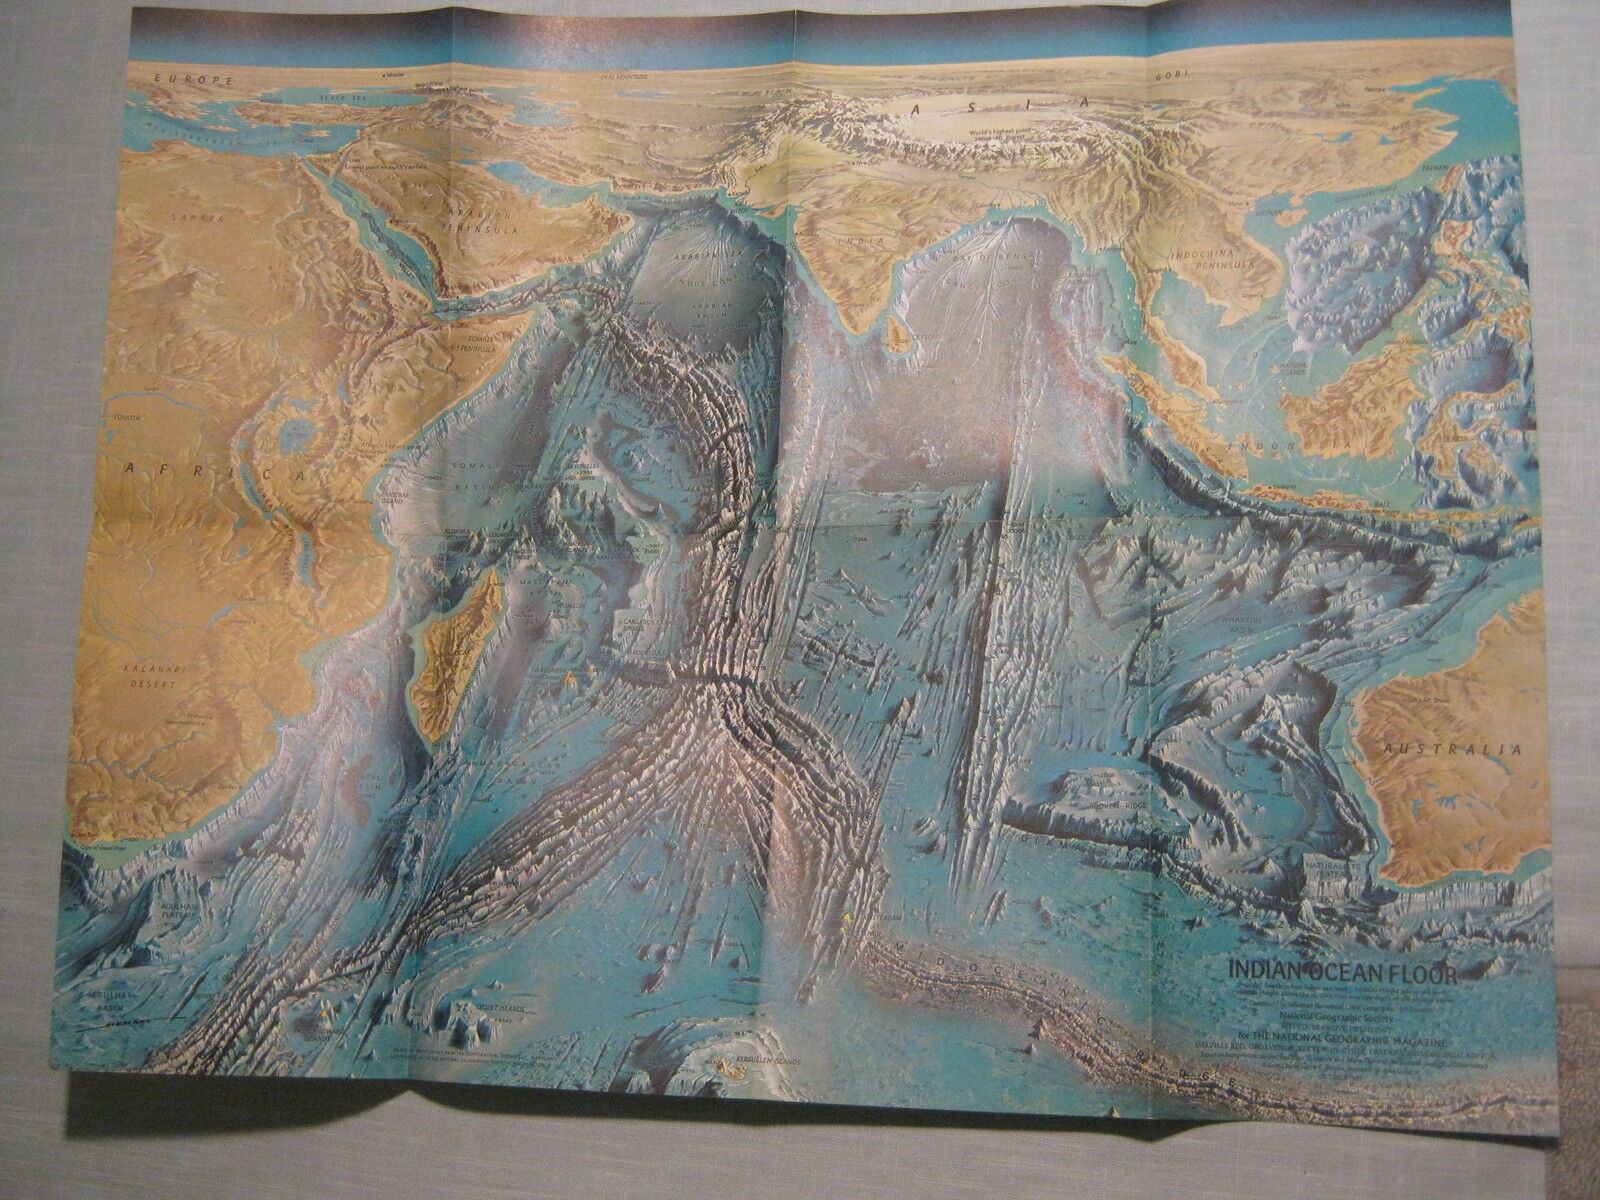 VINTAGE INDIAN OCEAN FLOOR WALL MAP National Geographic October 1967 